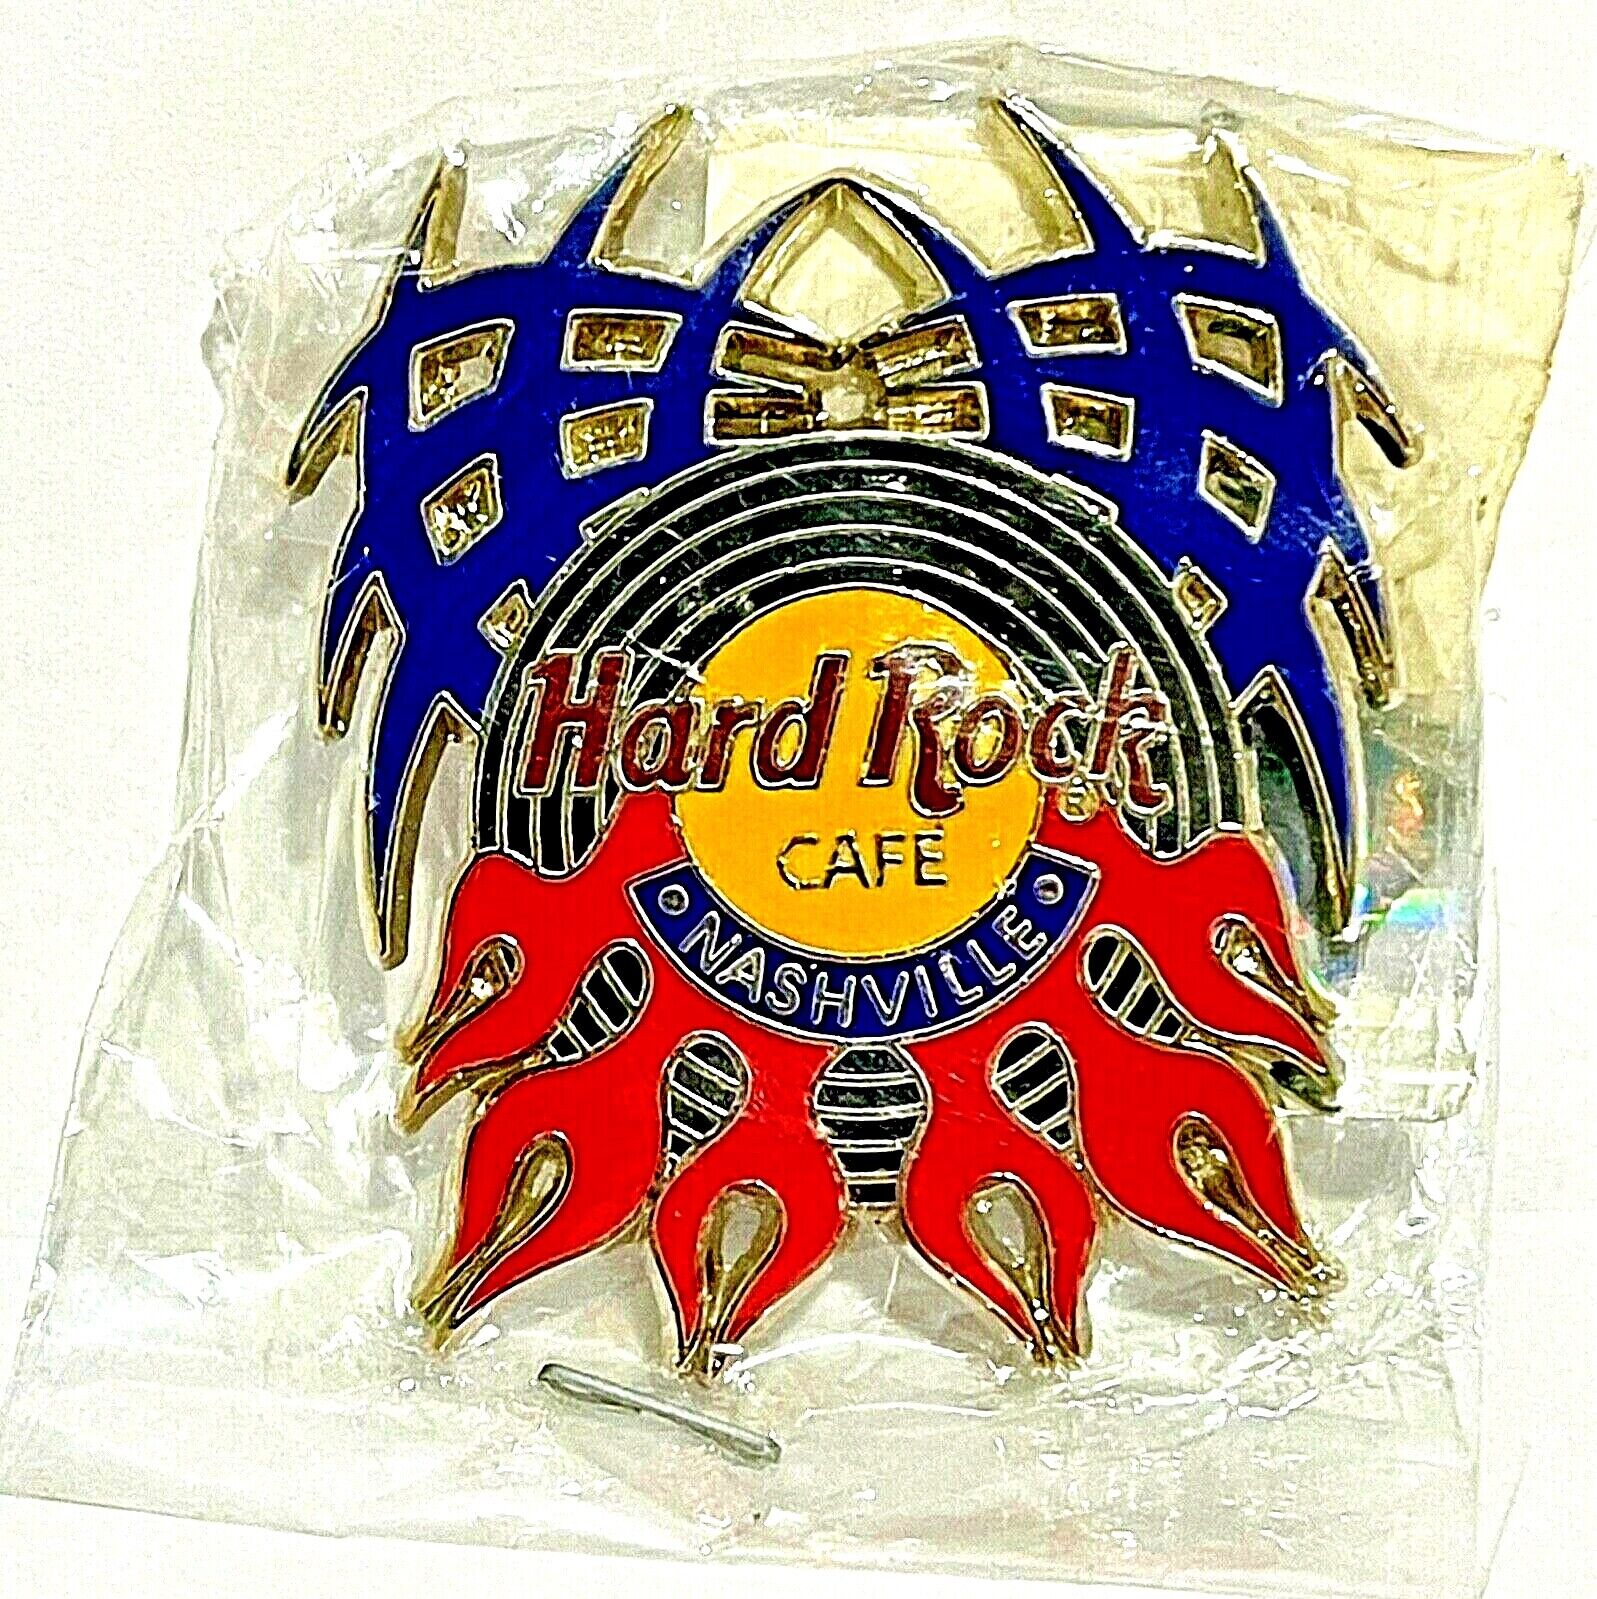 Hard Rock Cafe Nashville Tattoo Series Pin 2002 Scratch n\' Burn LE NEW # 6194